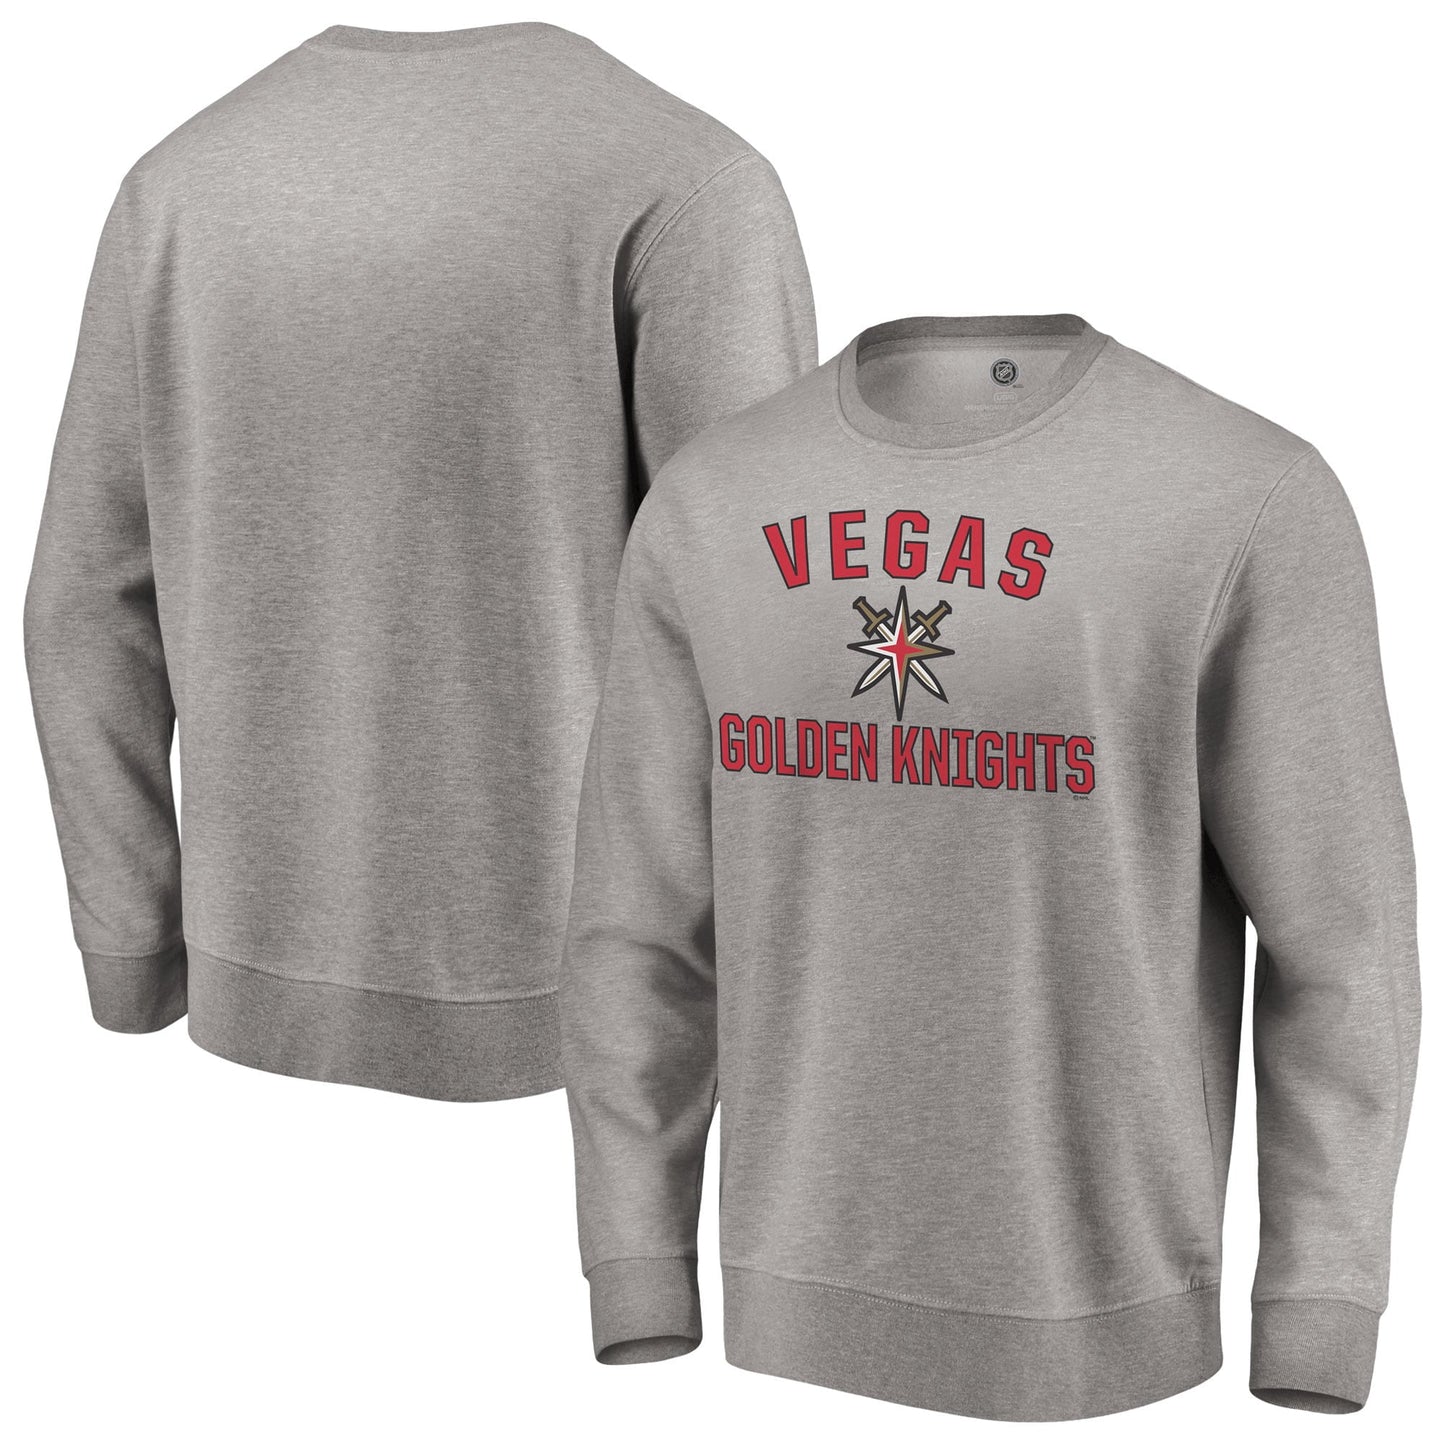 Men's Fanatics Branded Heather Gray Vegas Golden Knights Special Edition Victory Arch Pullover Sweatshirt